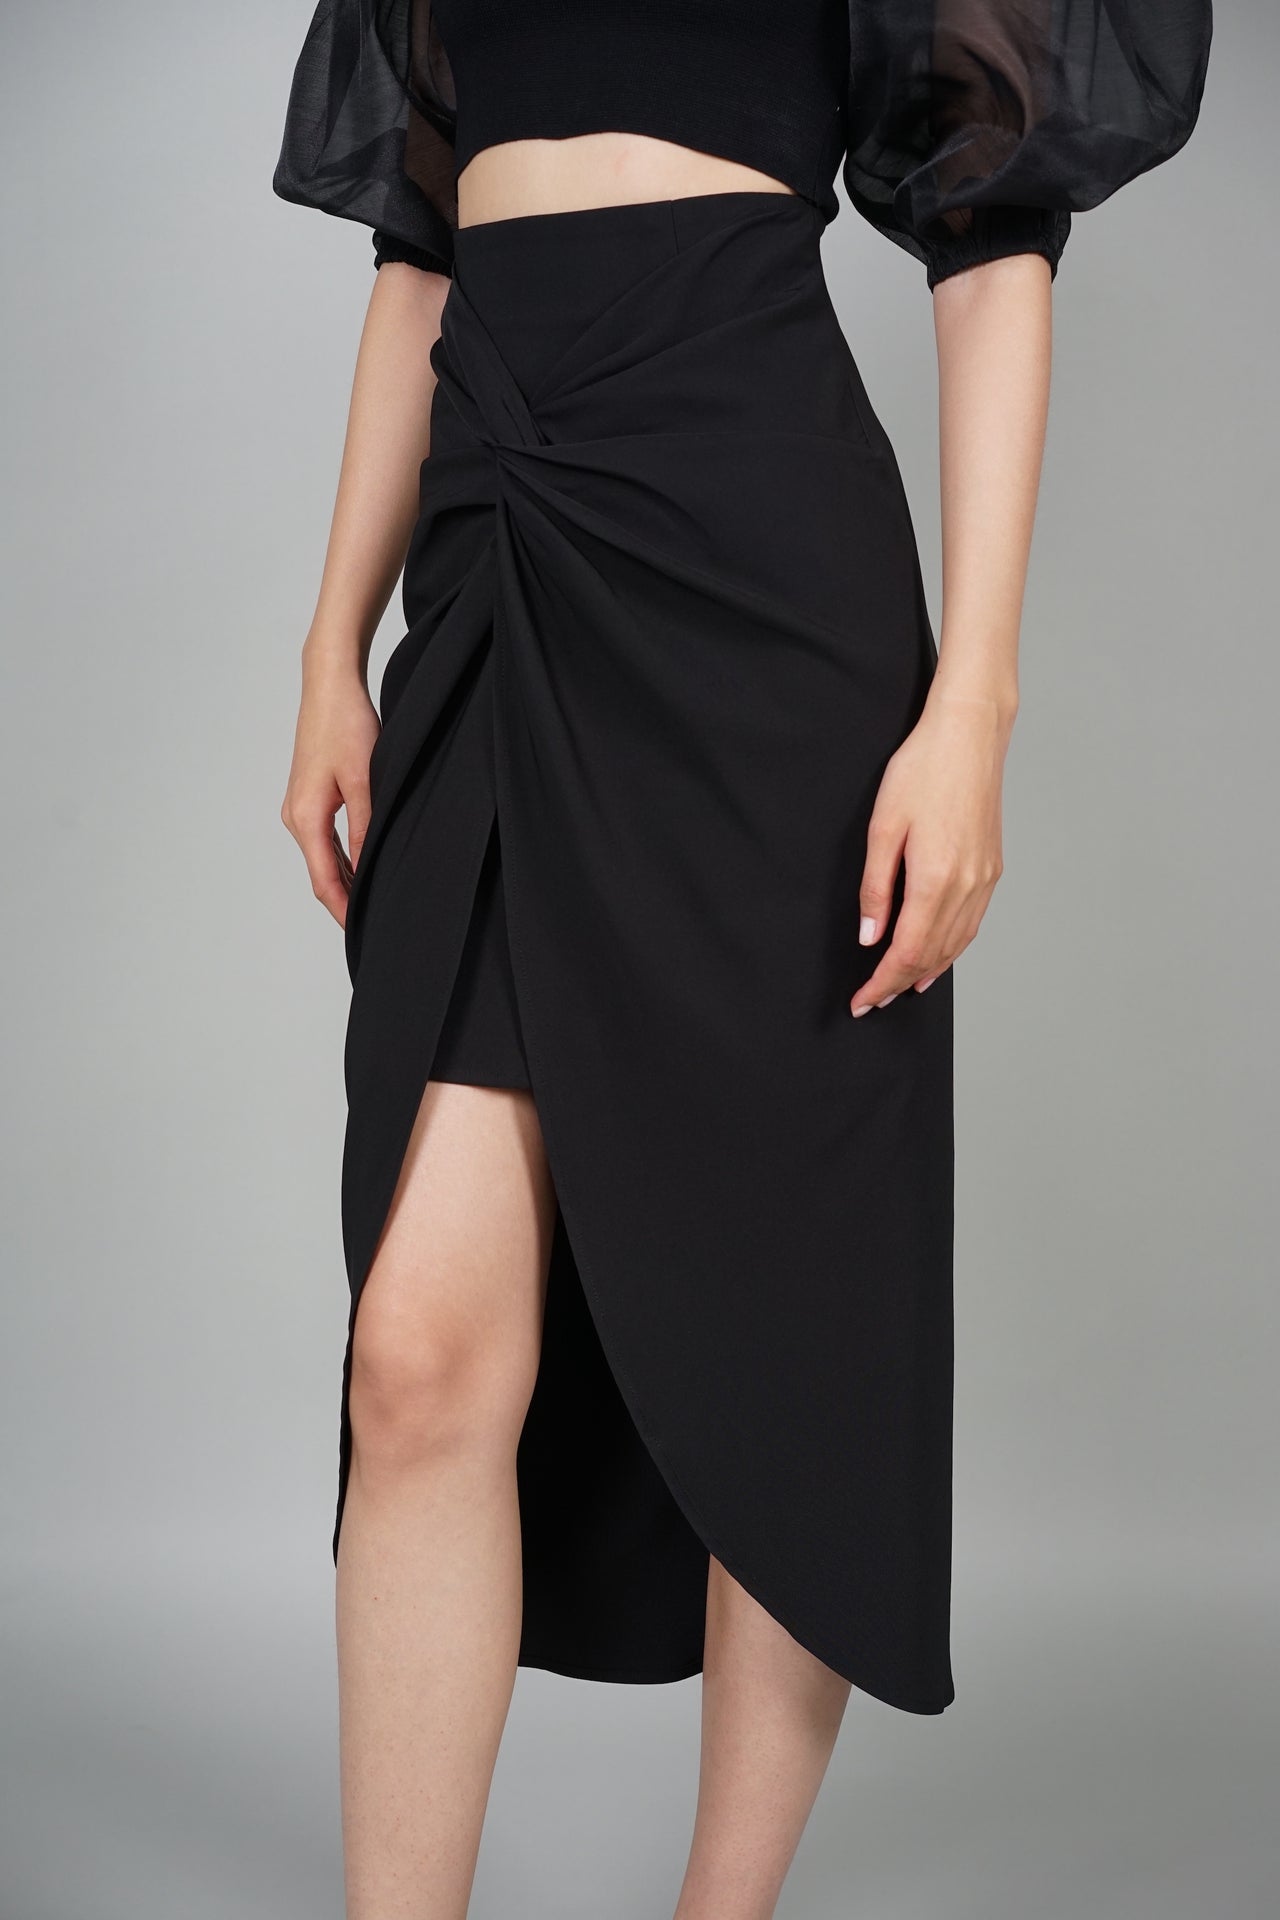 Scarlette Ruched Midi Skirt in Black